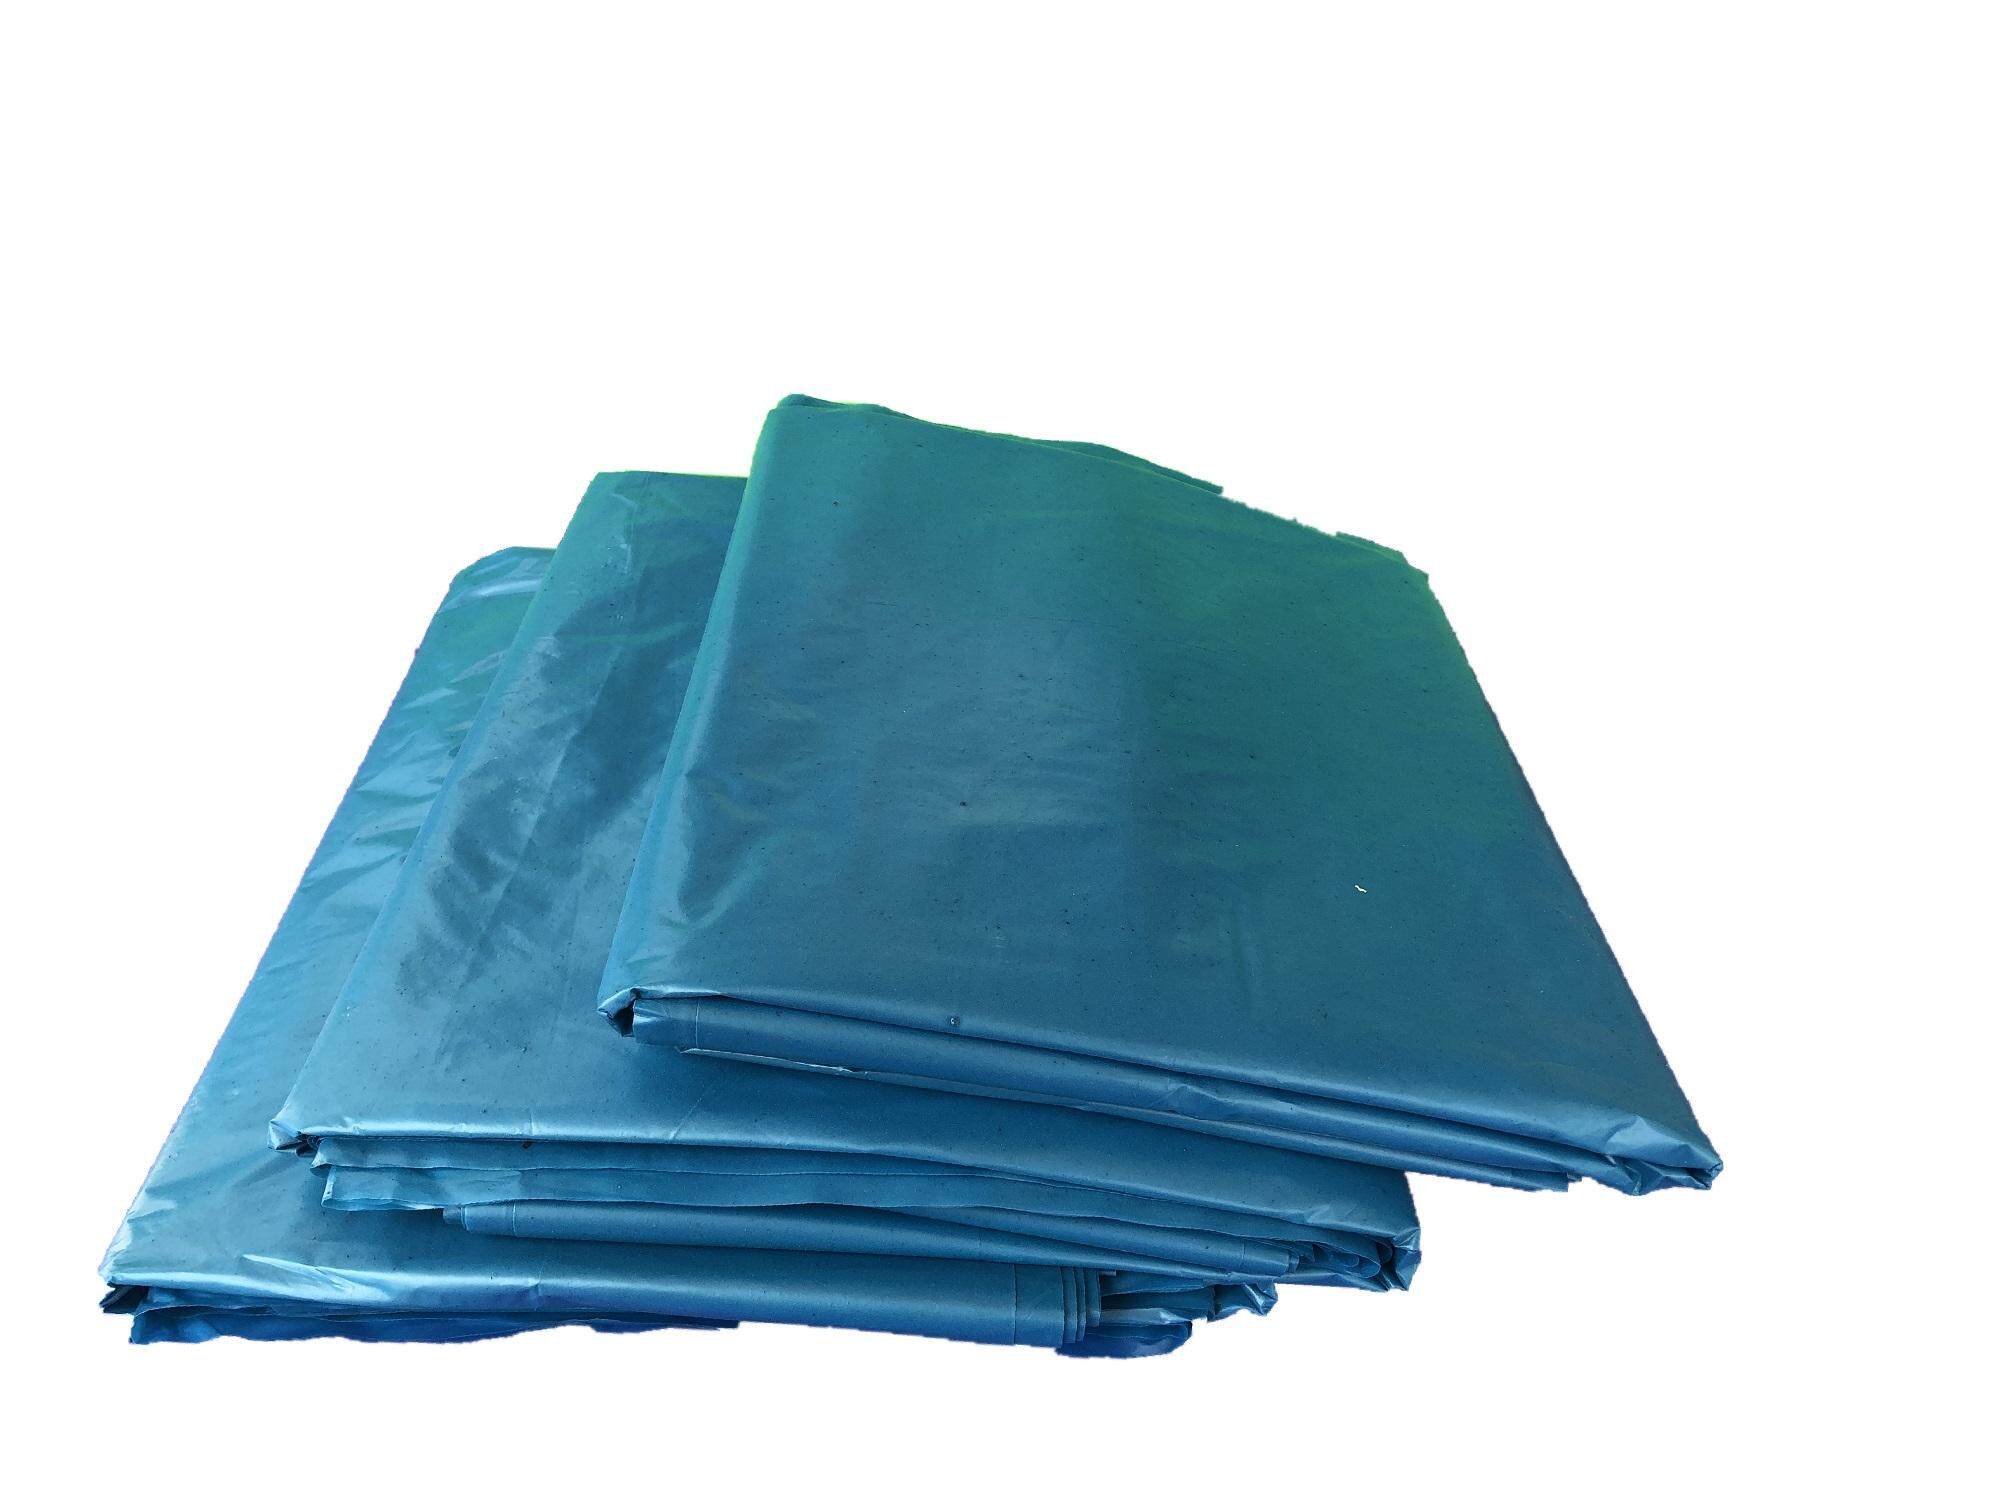 M_Fถุงขยะสีฟ้า 36 นิ้ว X 45 นิ้ว (1 kg)